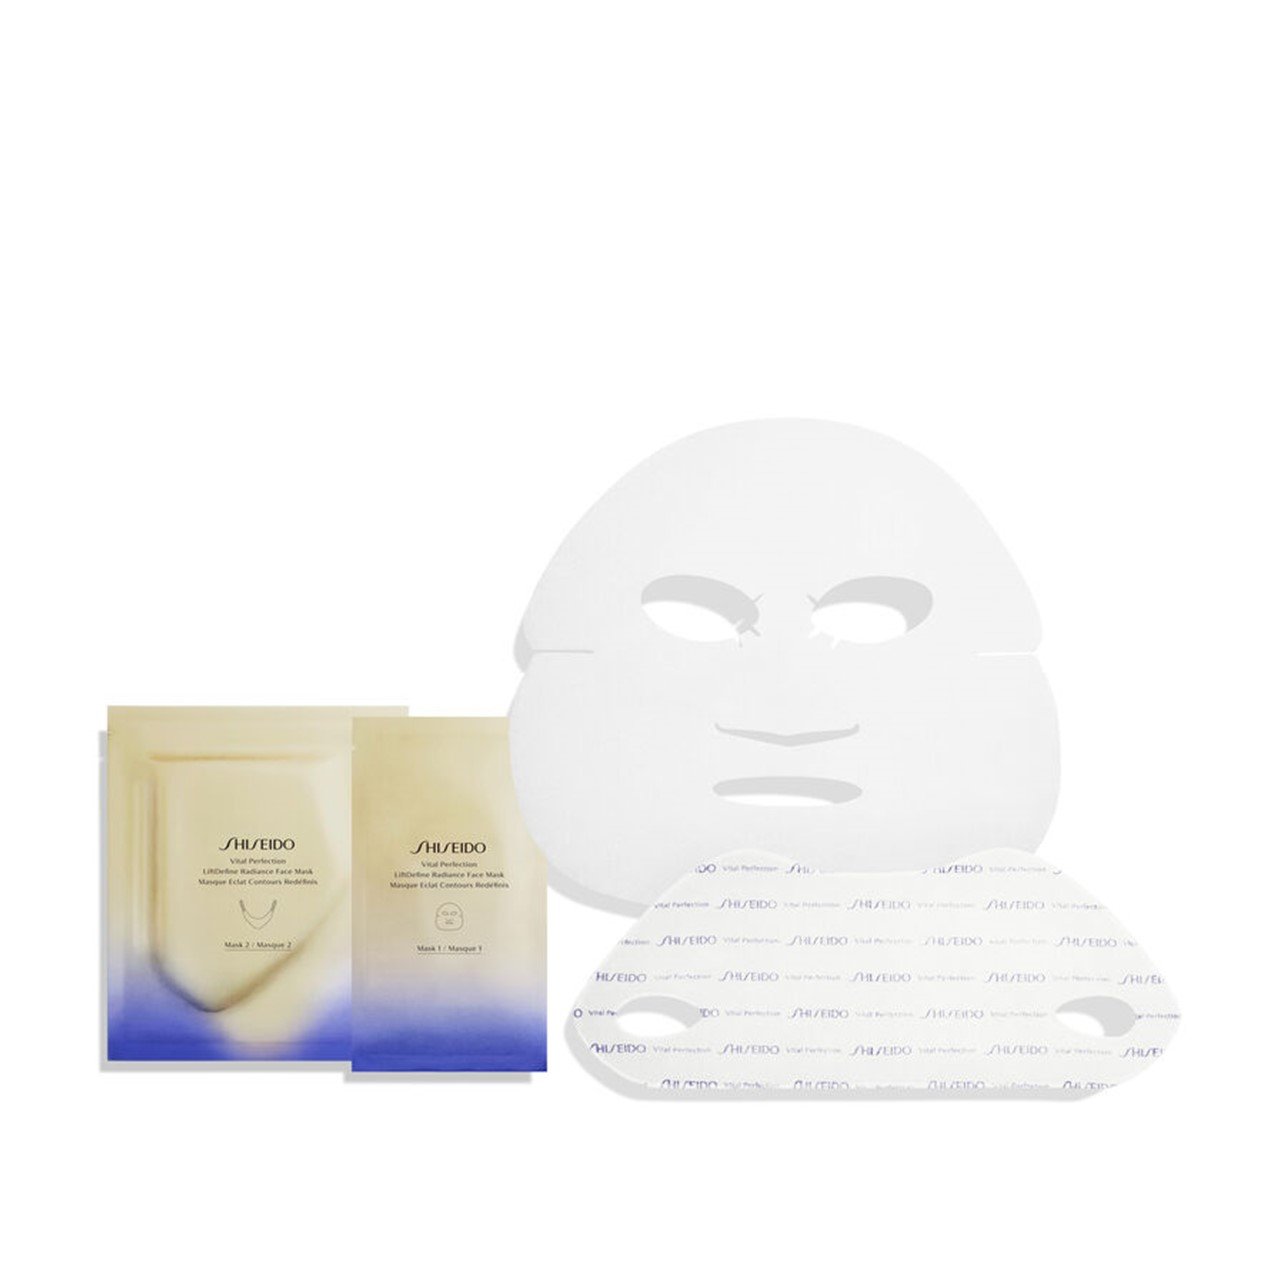 Shiseido Vital Perfection LiftDefine Radiance Face Sheet Mask 2x6